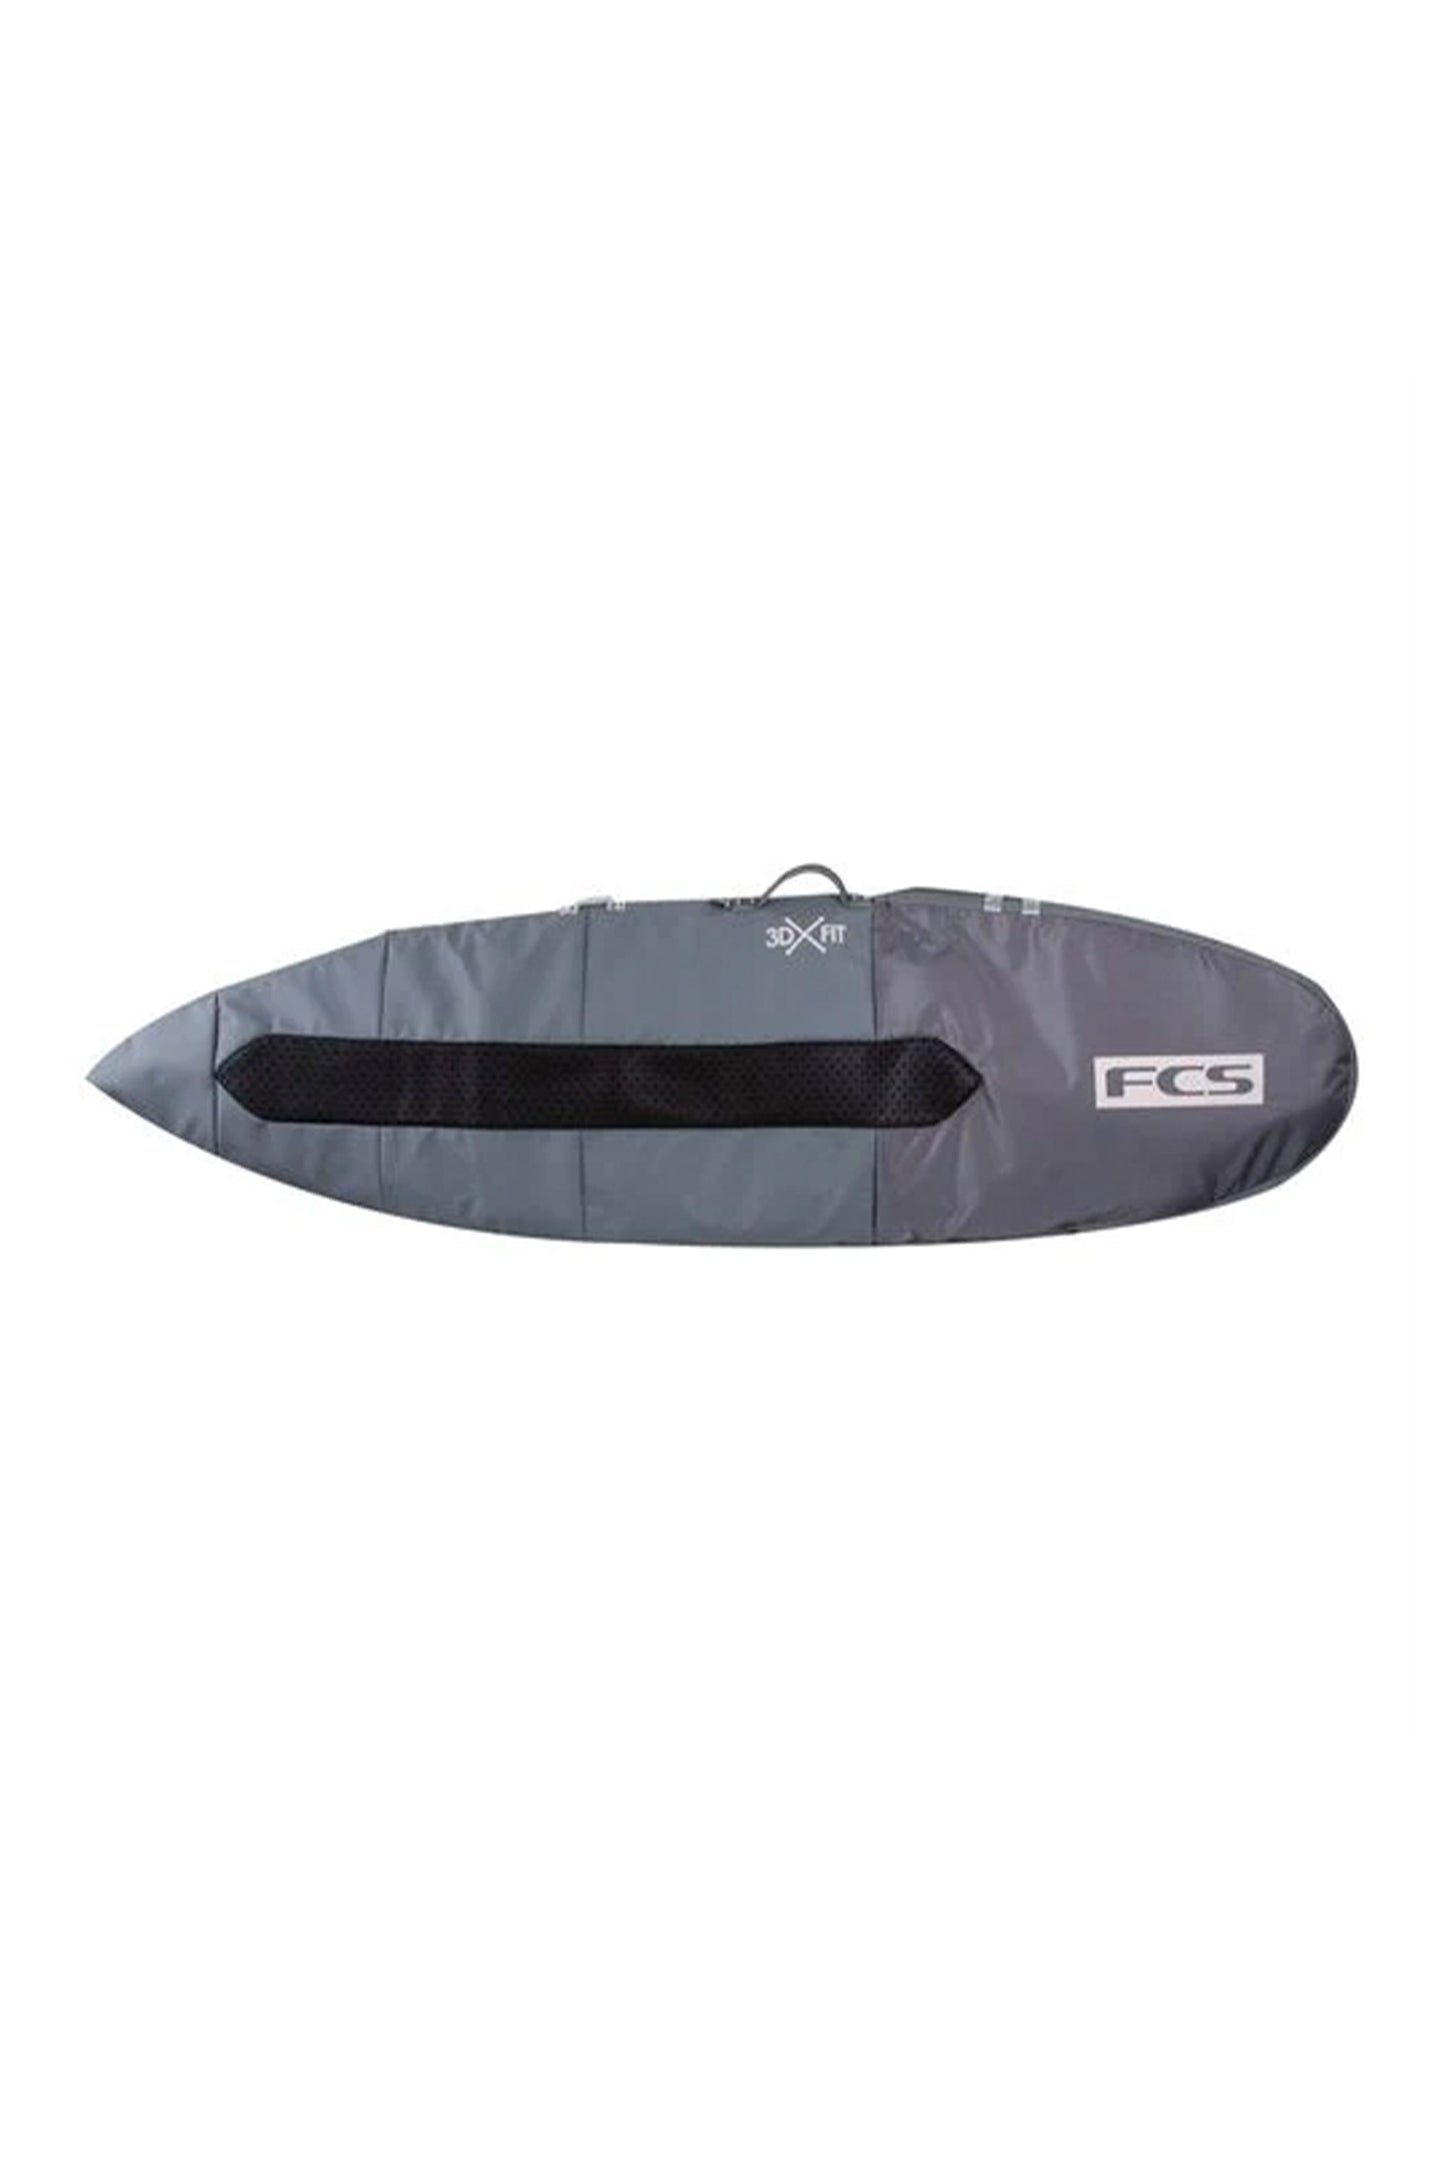 
                  
                       Pukas-Surf-Shop-FCS-Boardbags-Day-fun-board-black
                  
                